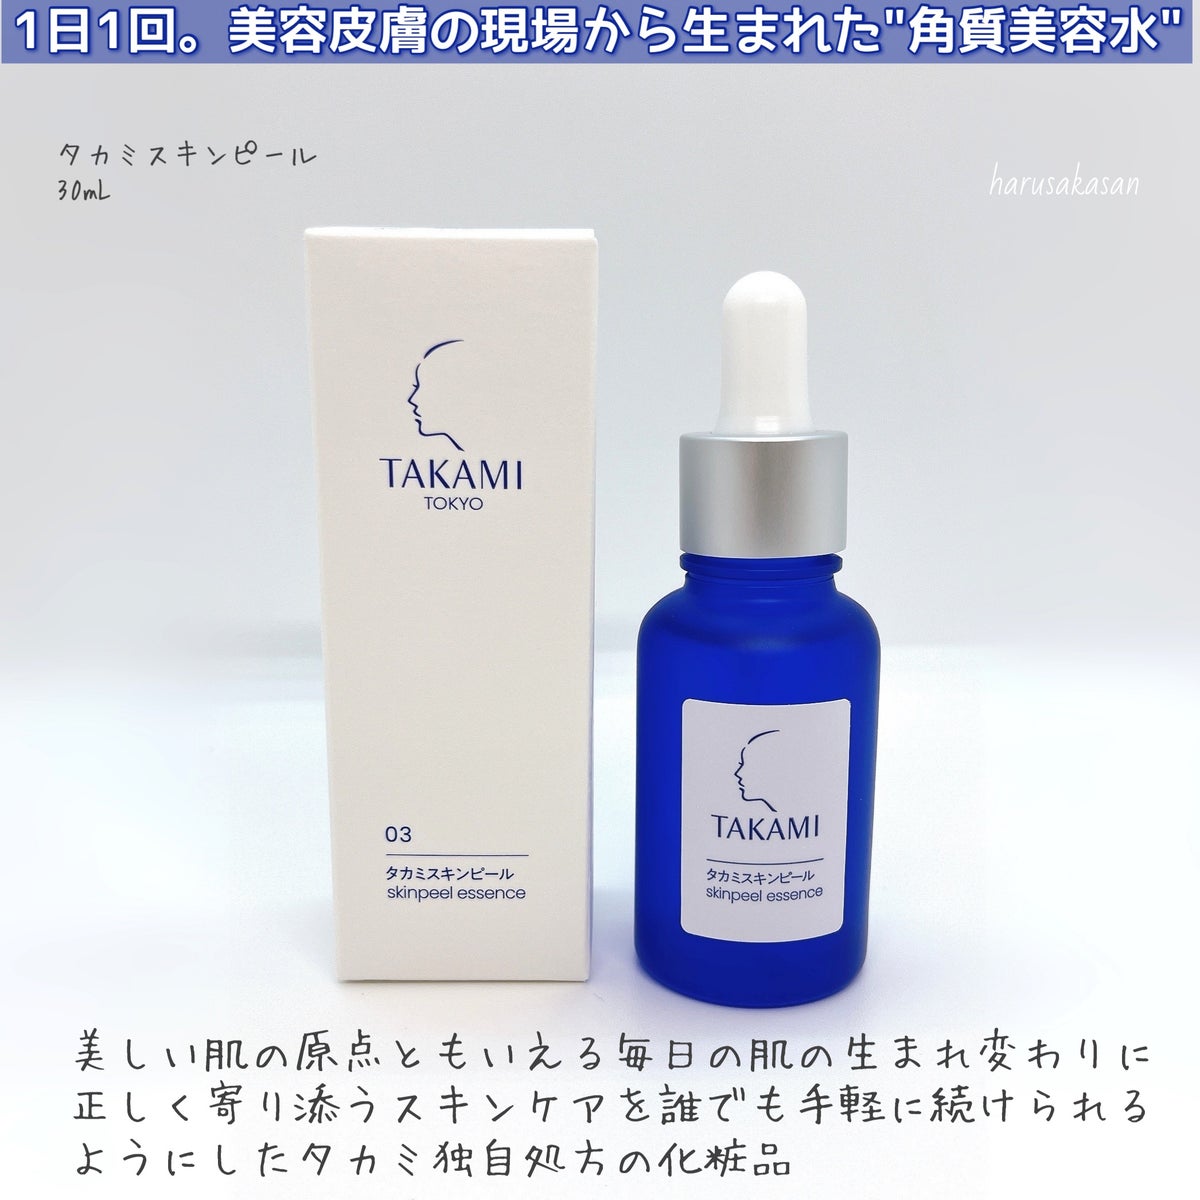 TAKAMI スキンピール タカミ ブースター 美容液 導入美容液